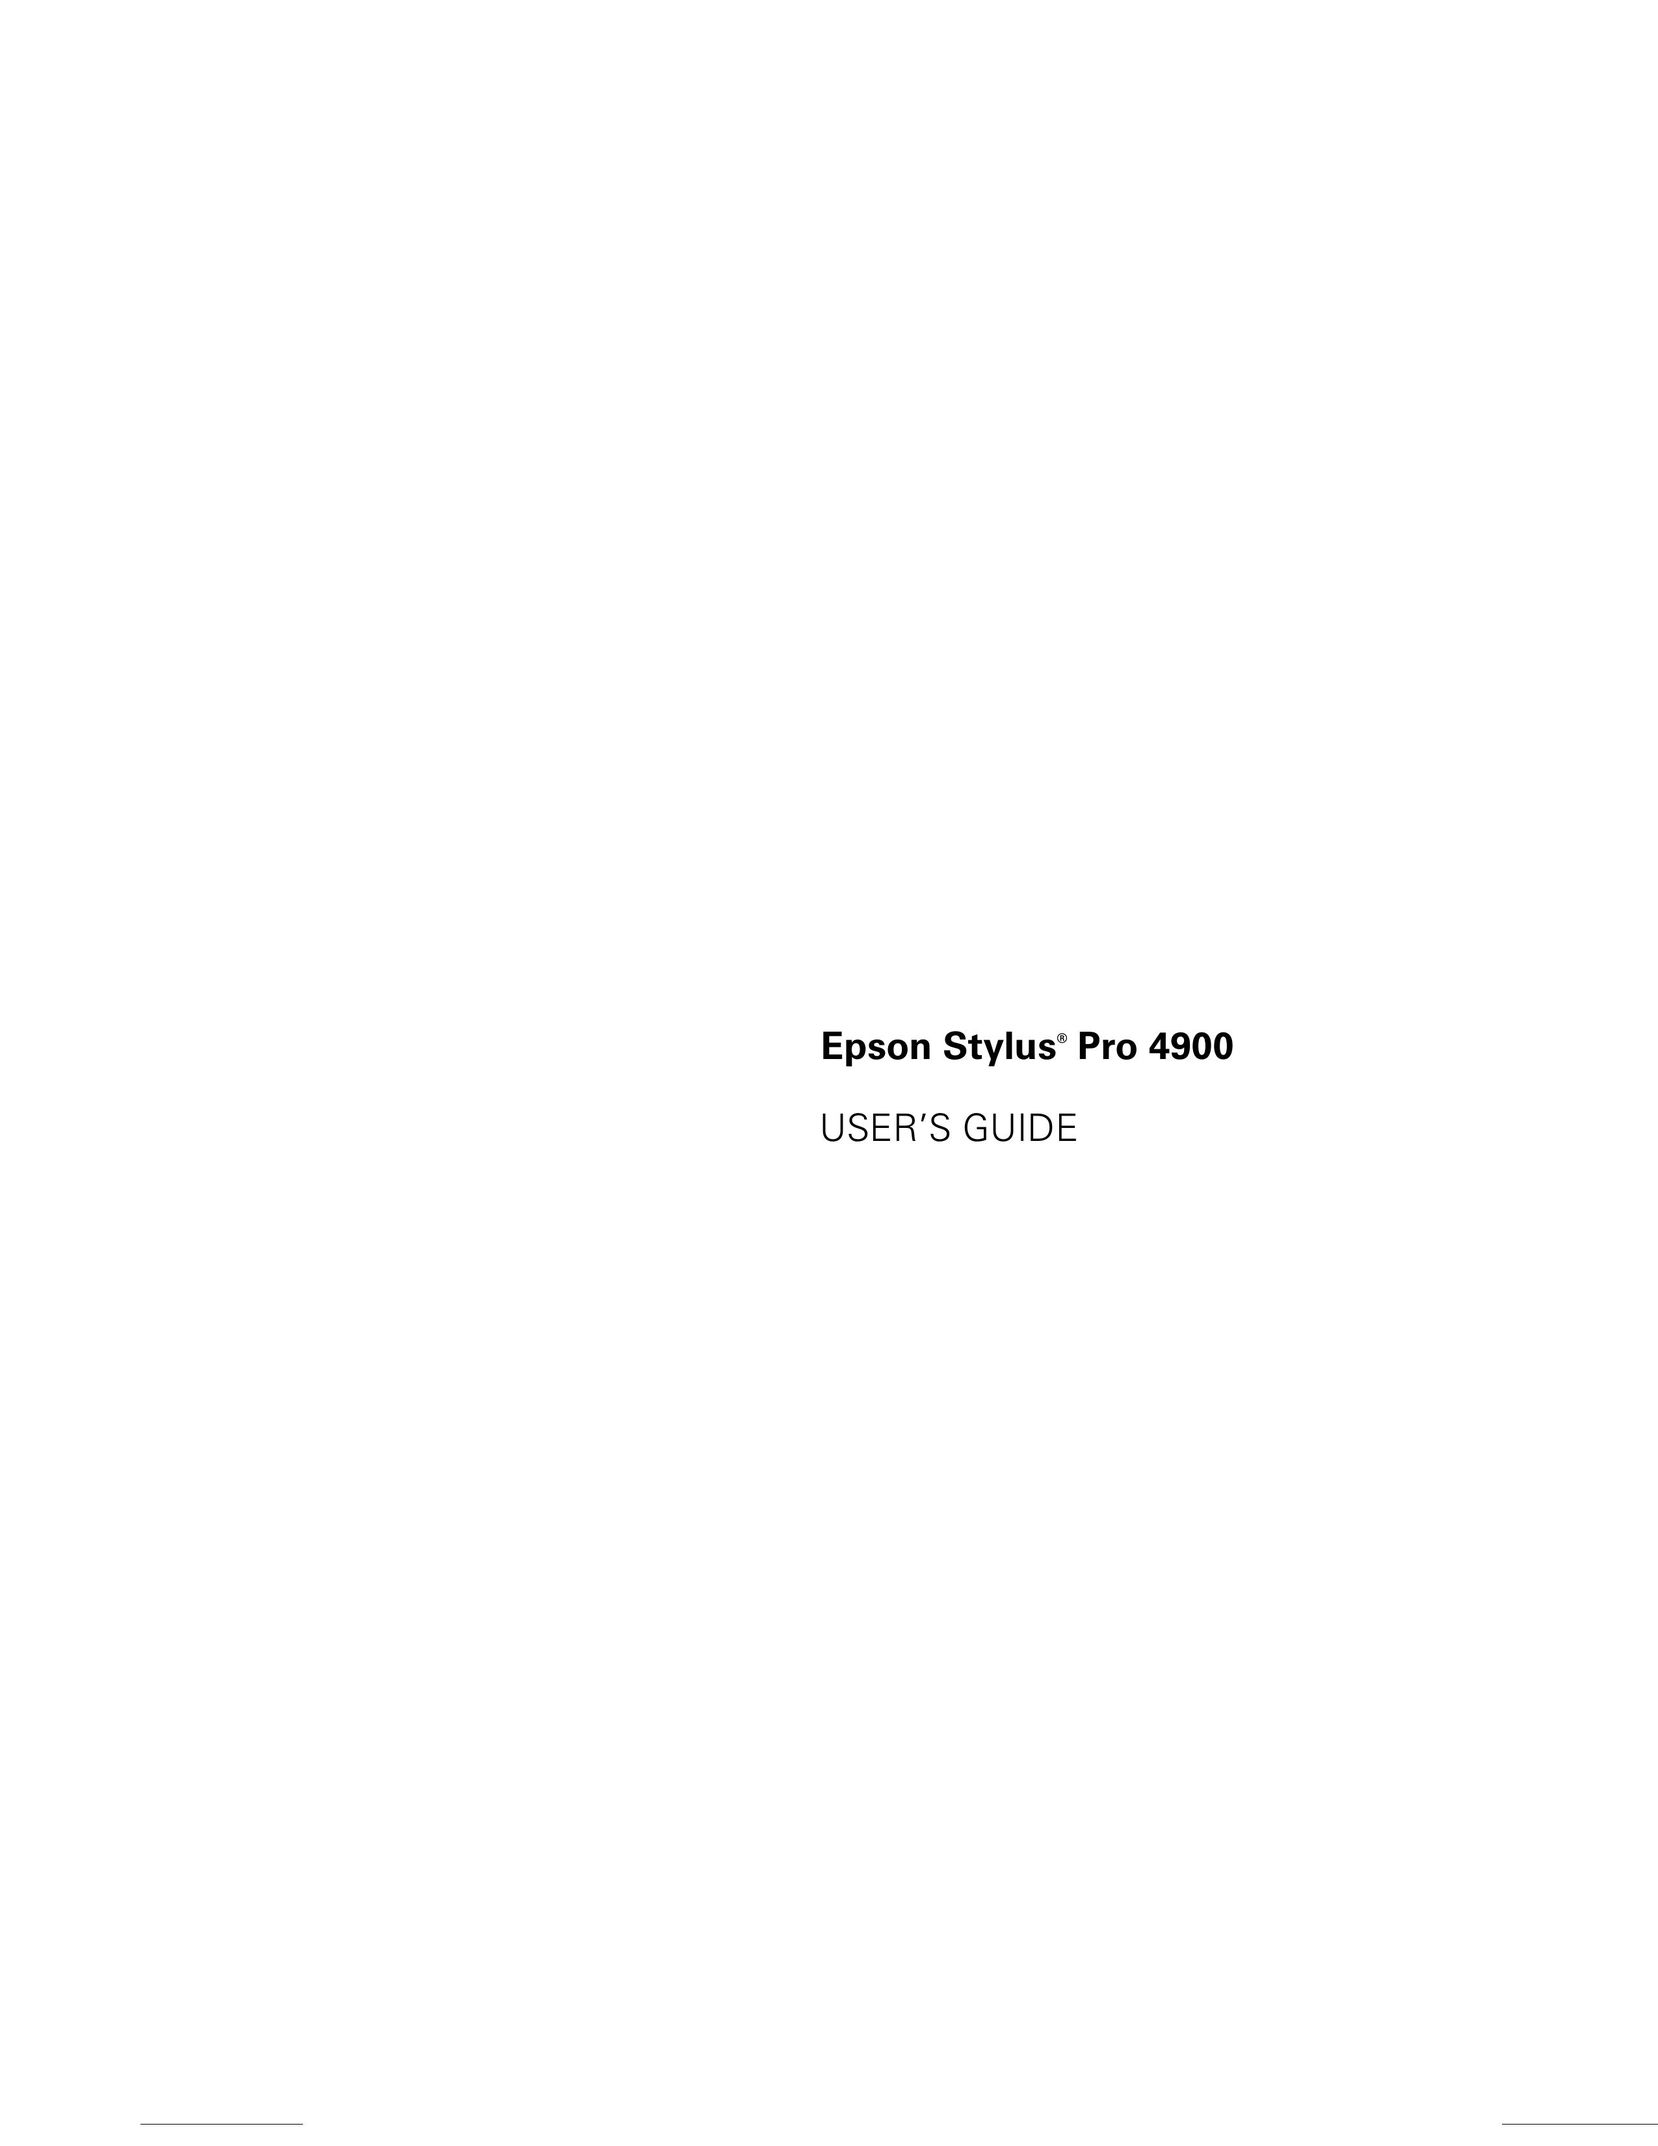 Ericsson SP4900HDR Printer User Manual